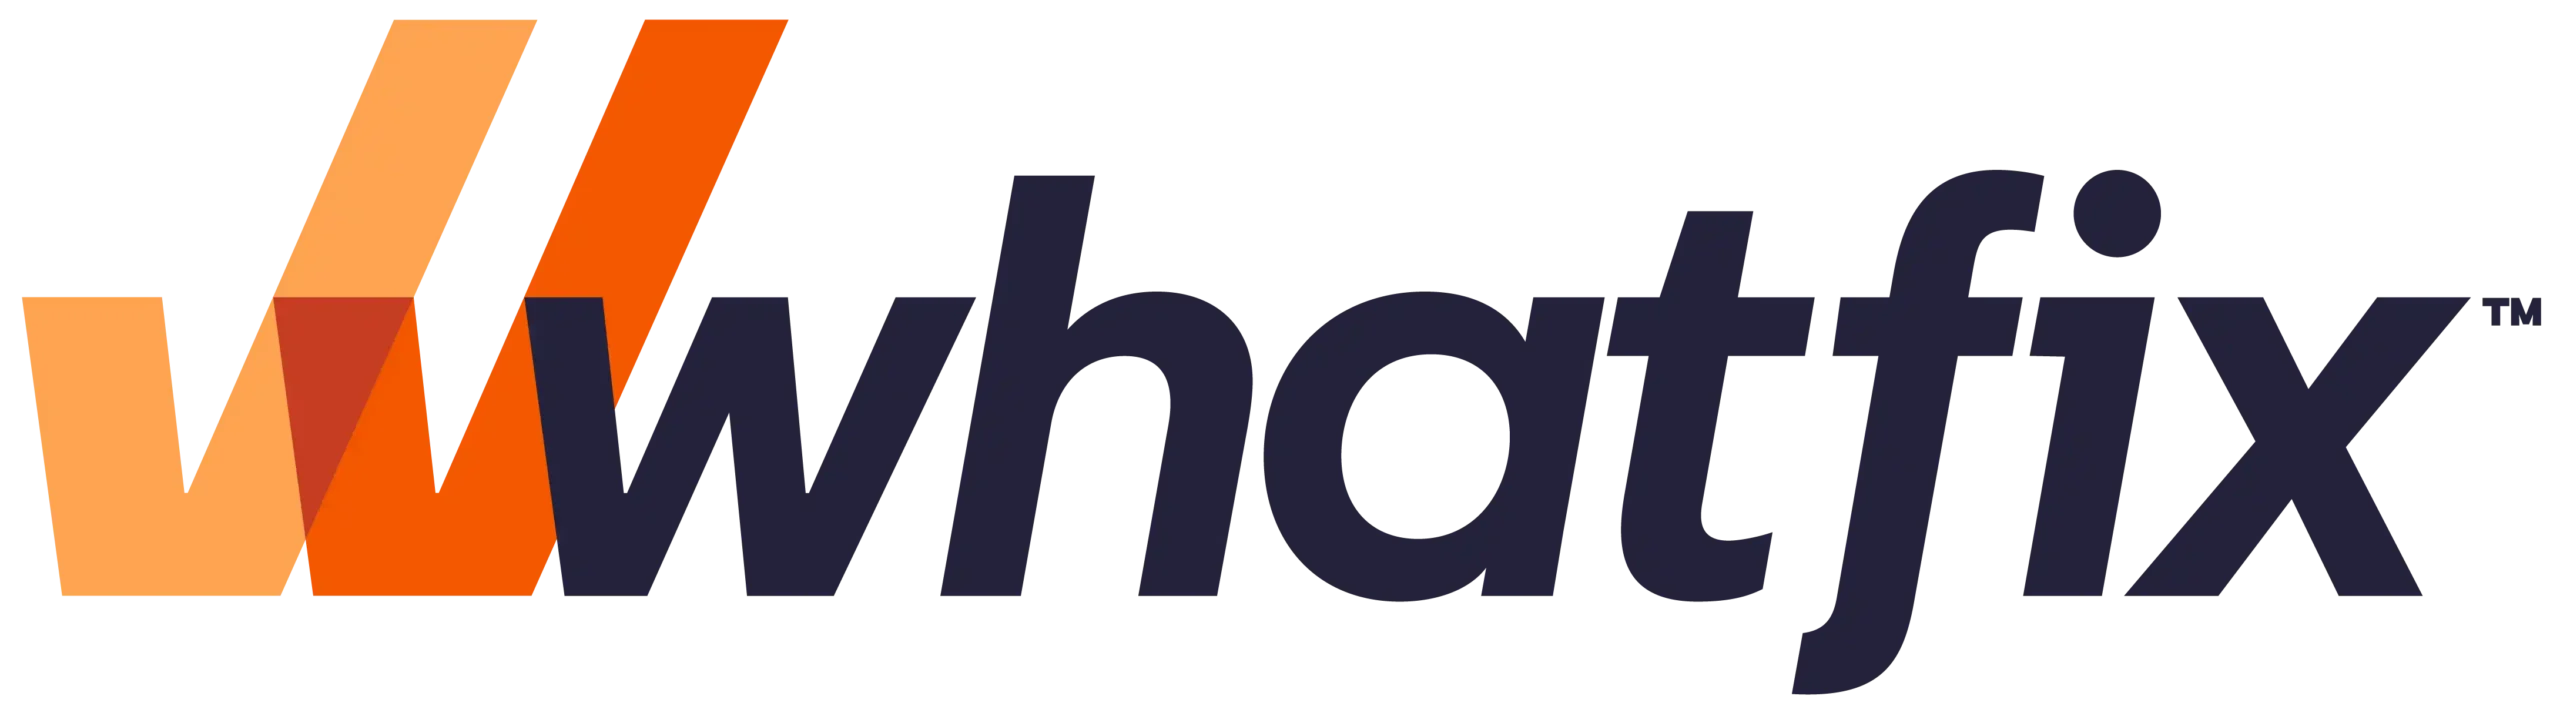 Whatfix-Logo-1